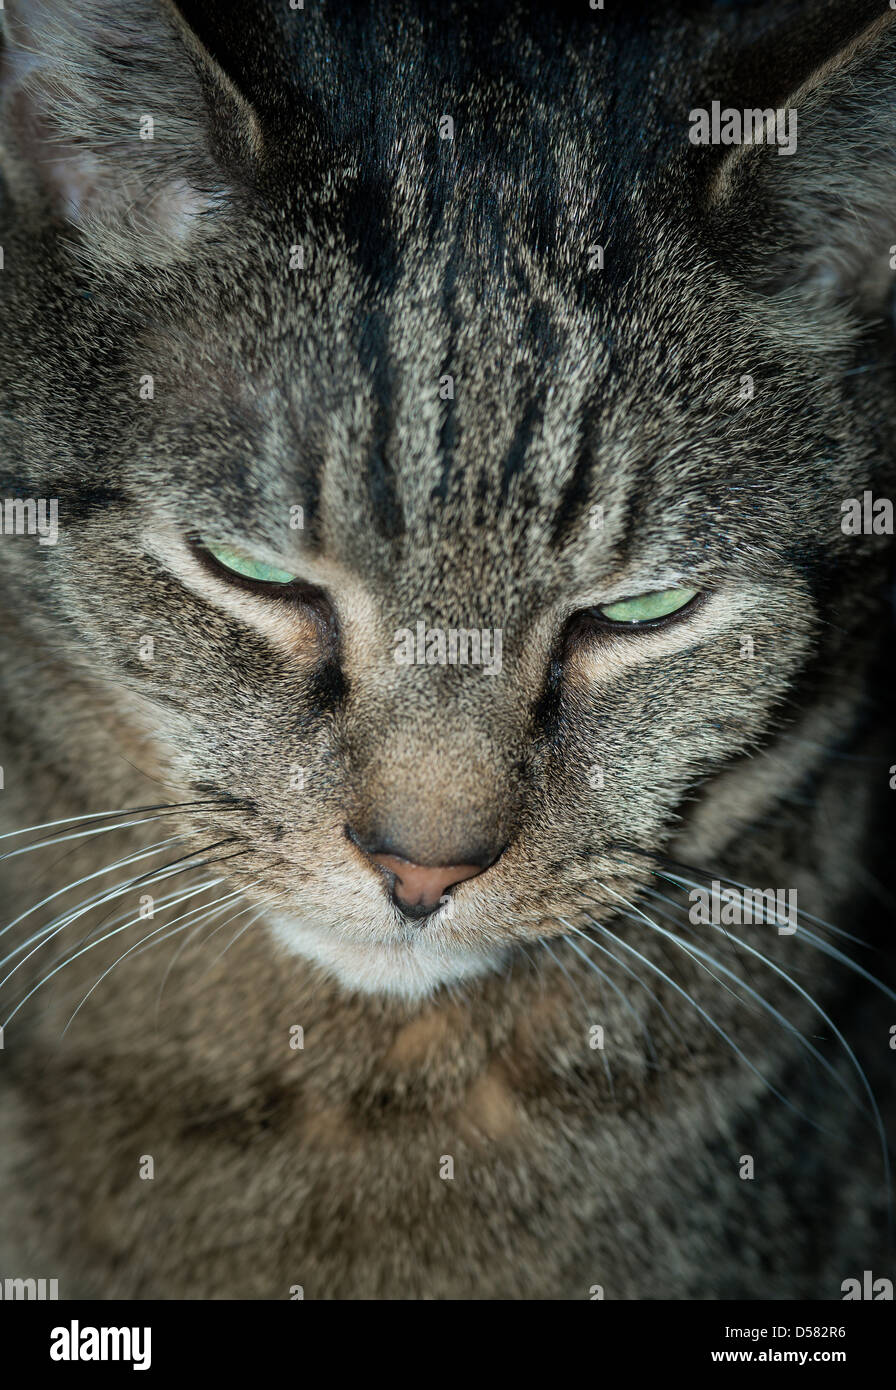 .Serious tabby cat portrait Stock Photo